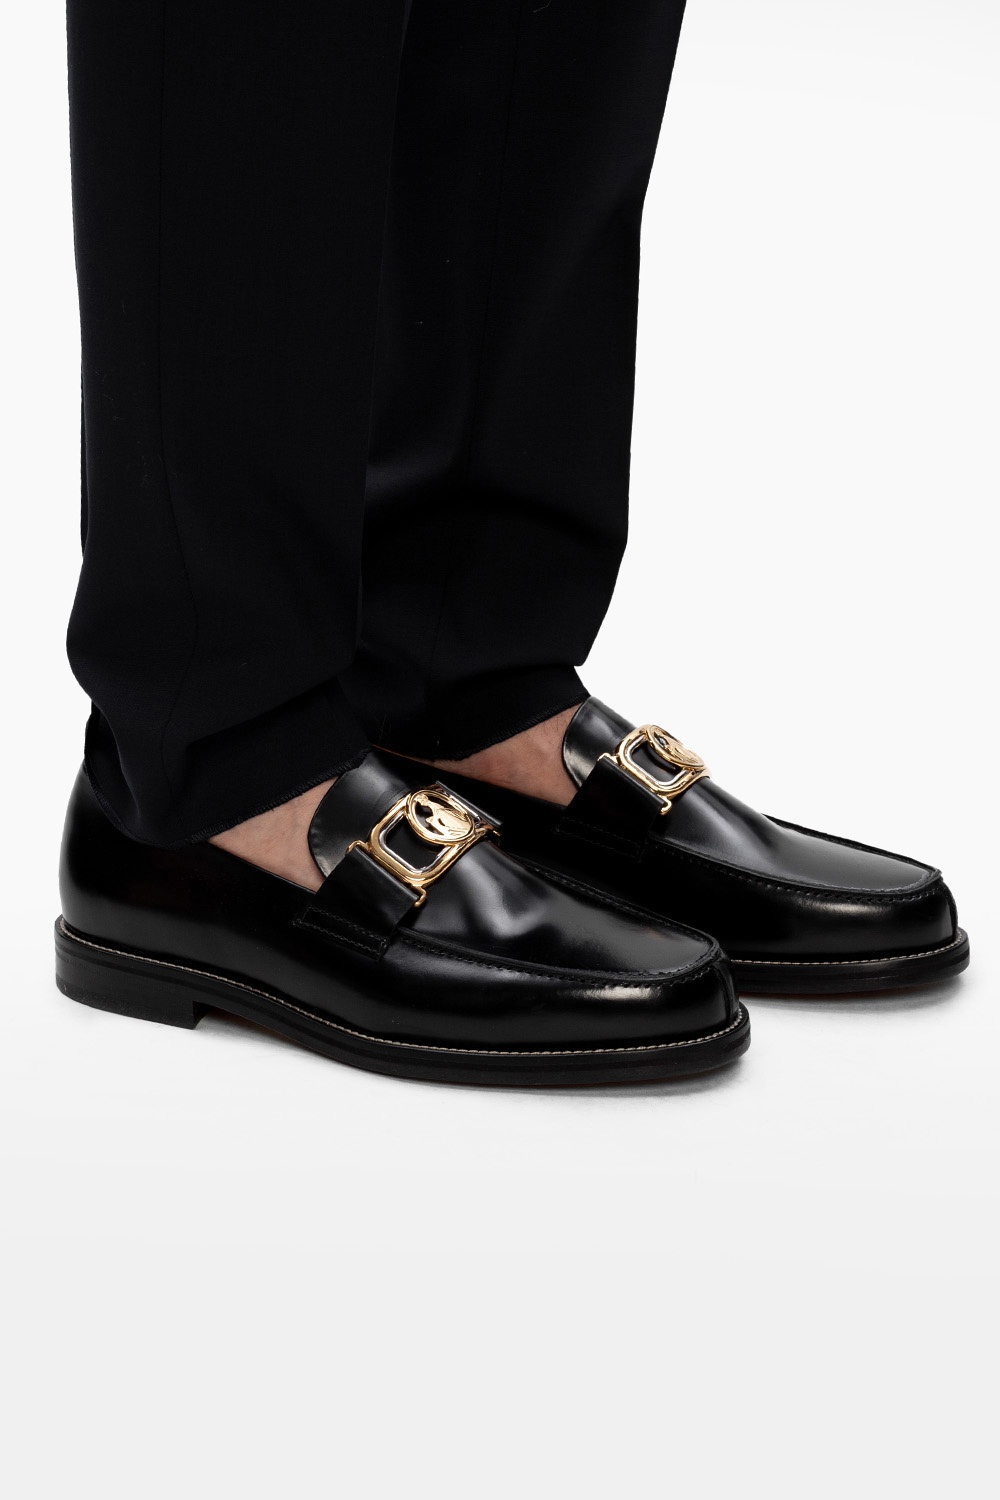 Lanvin loafers | Shoes | Vitkac